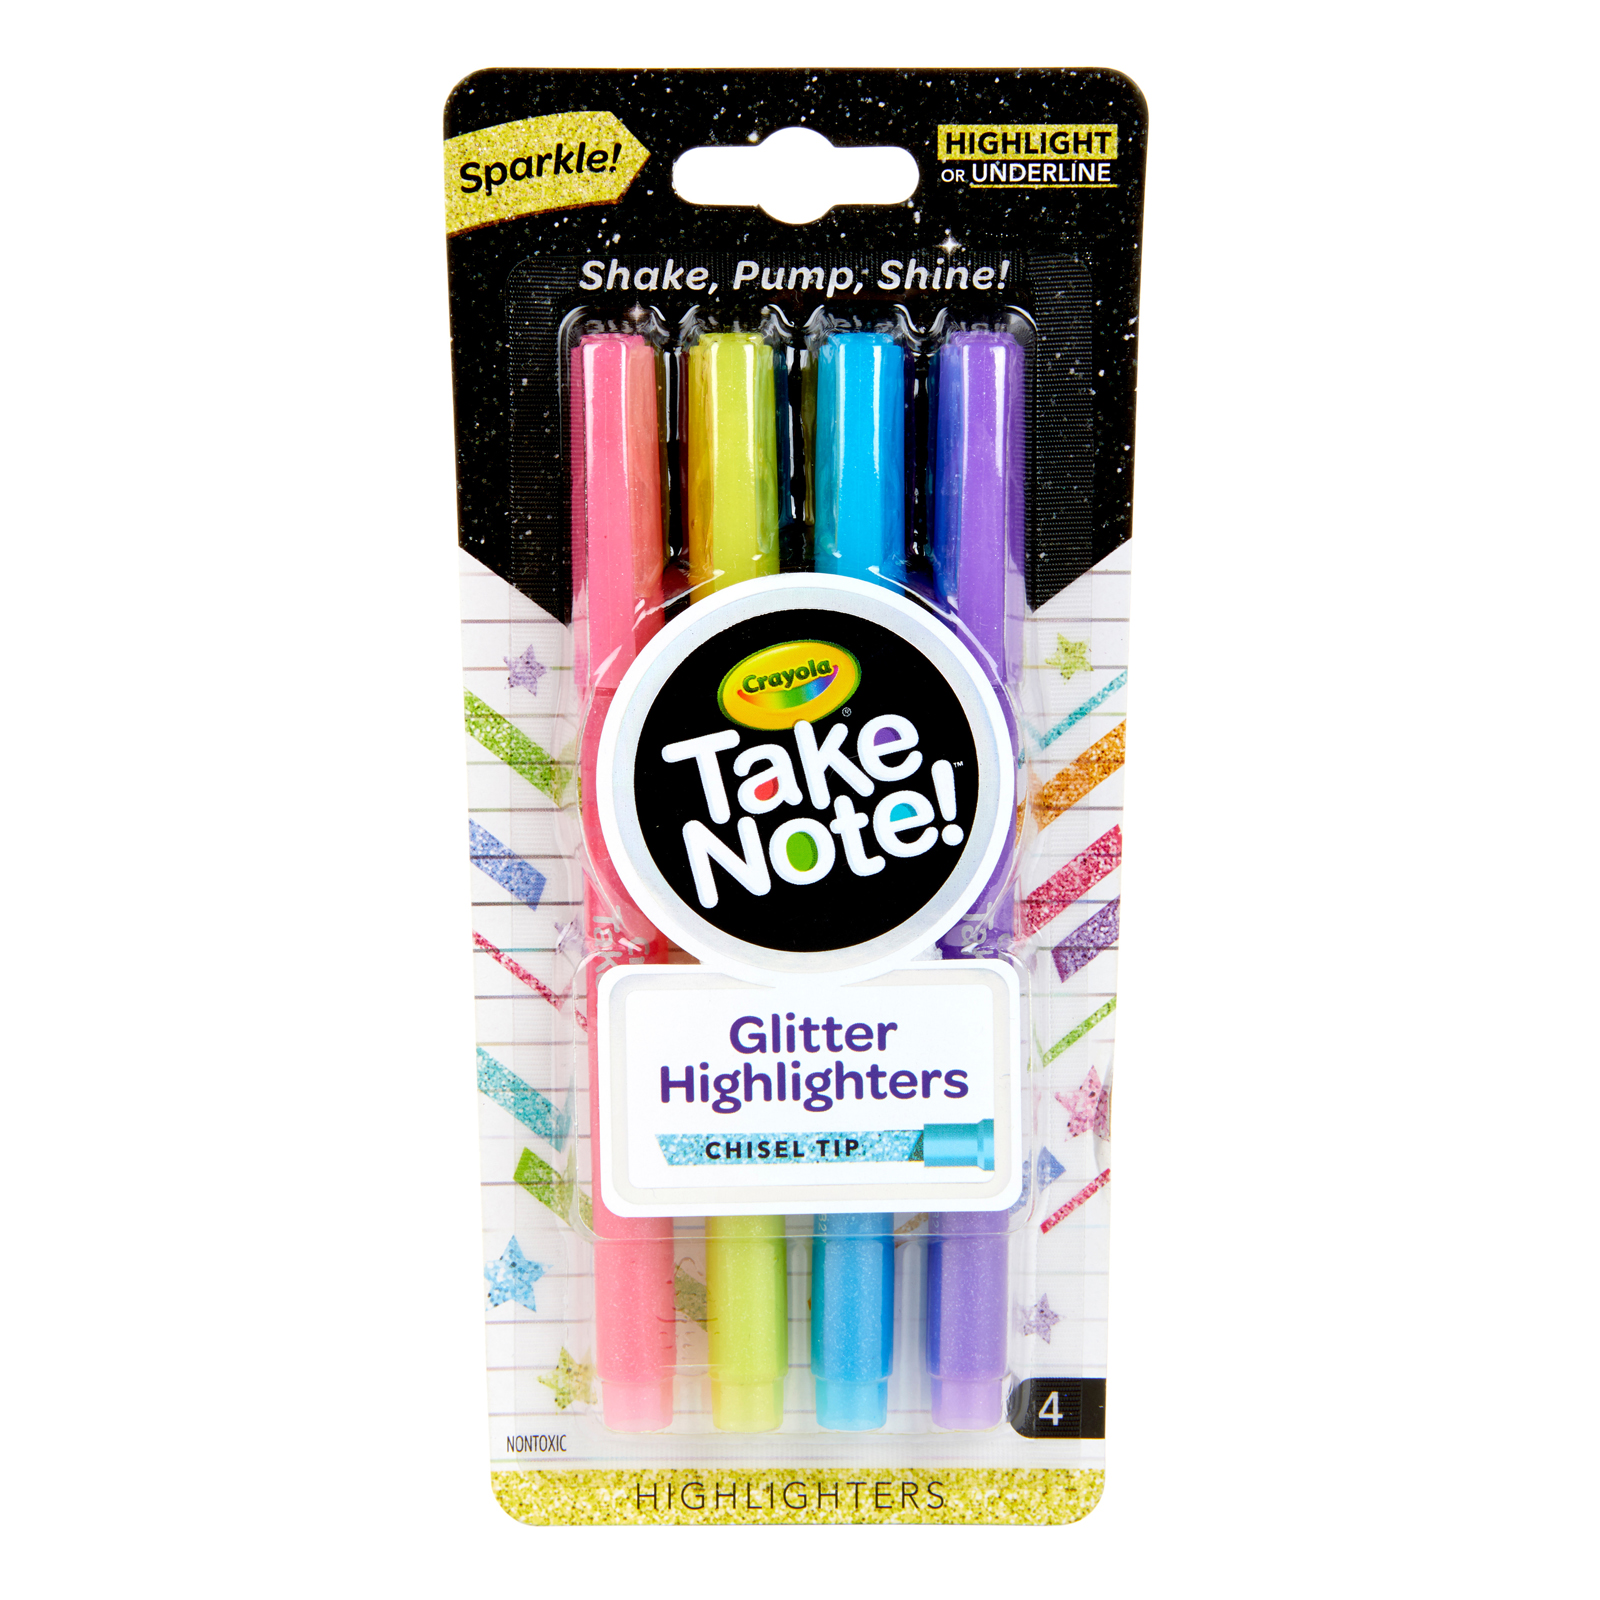 Take Note Glitter Highlighters, 4 Per Pack, 3 Packs